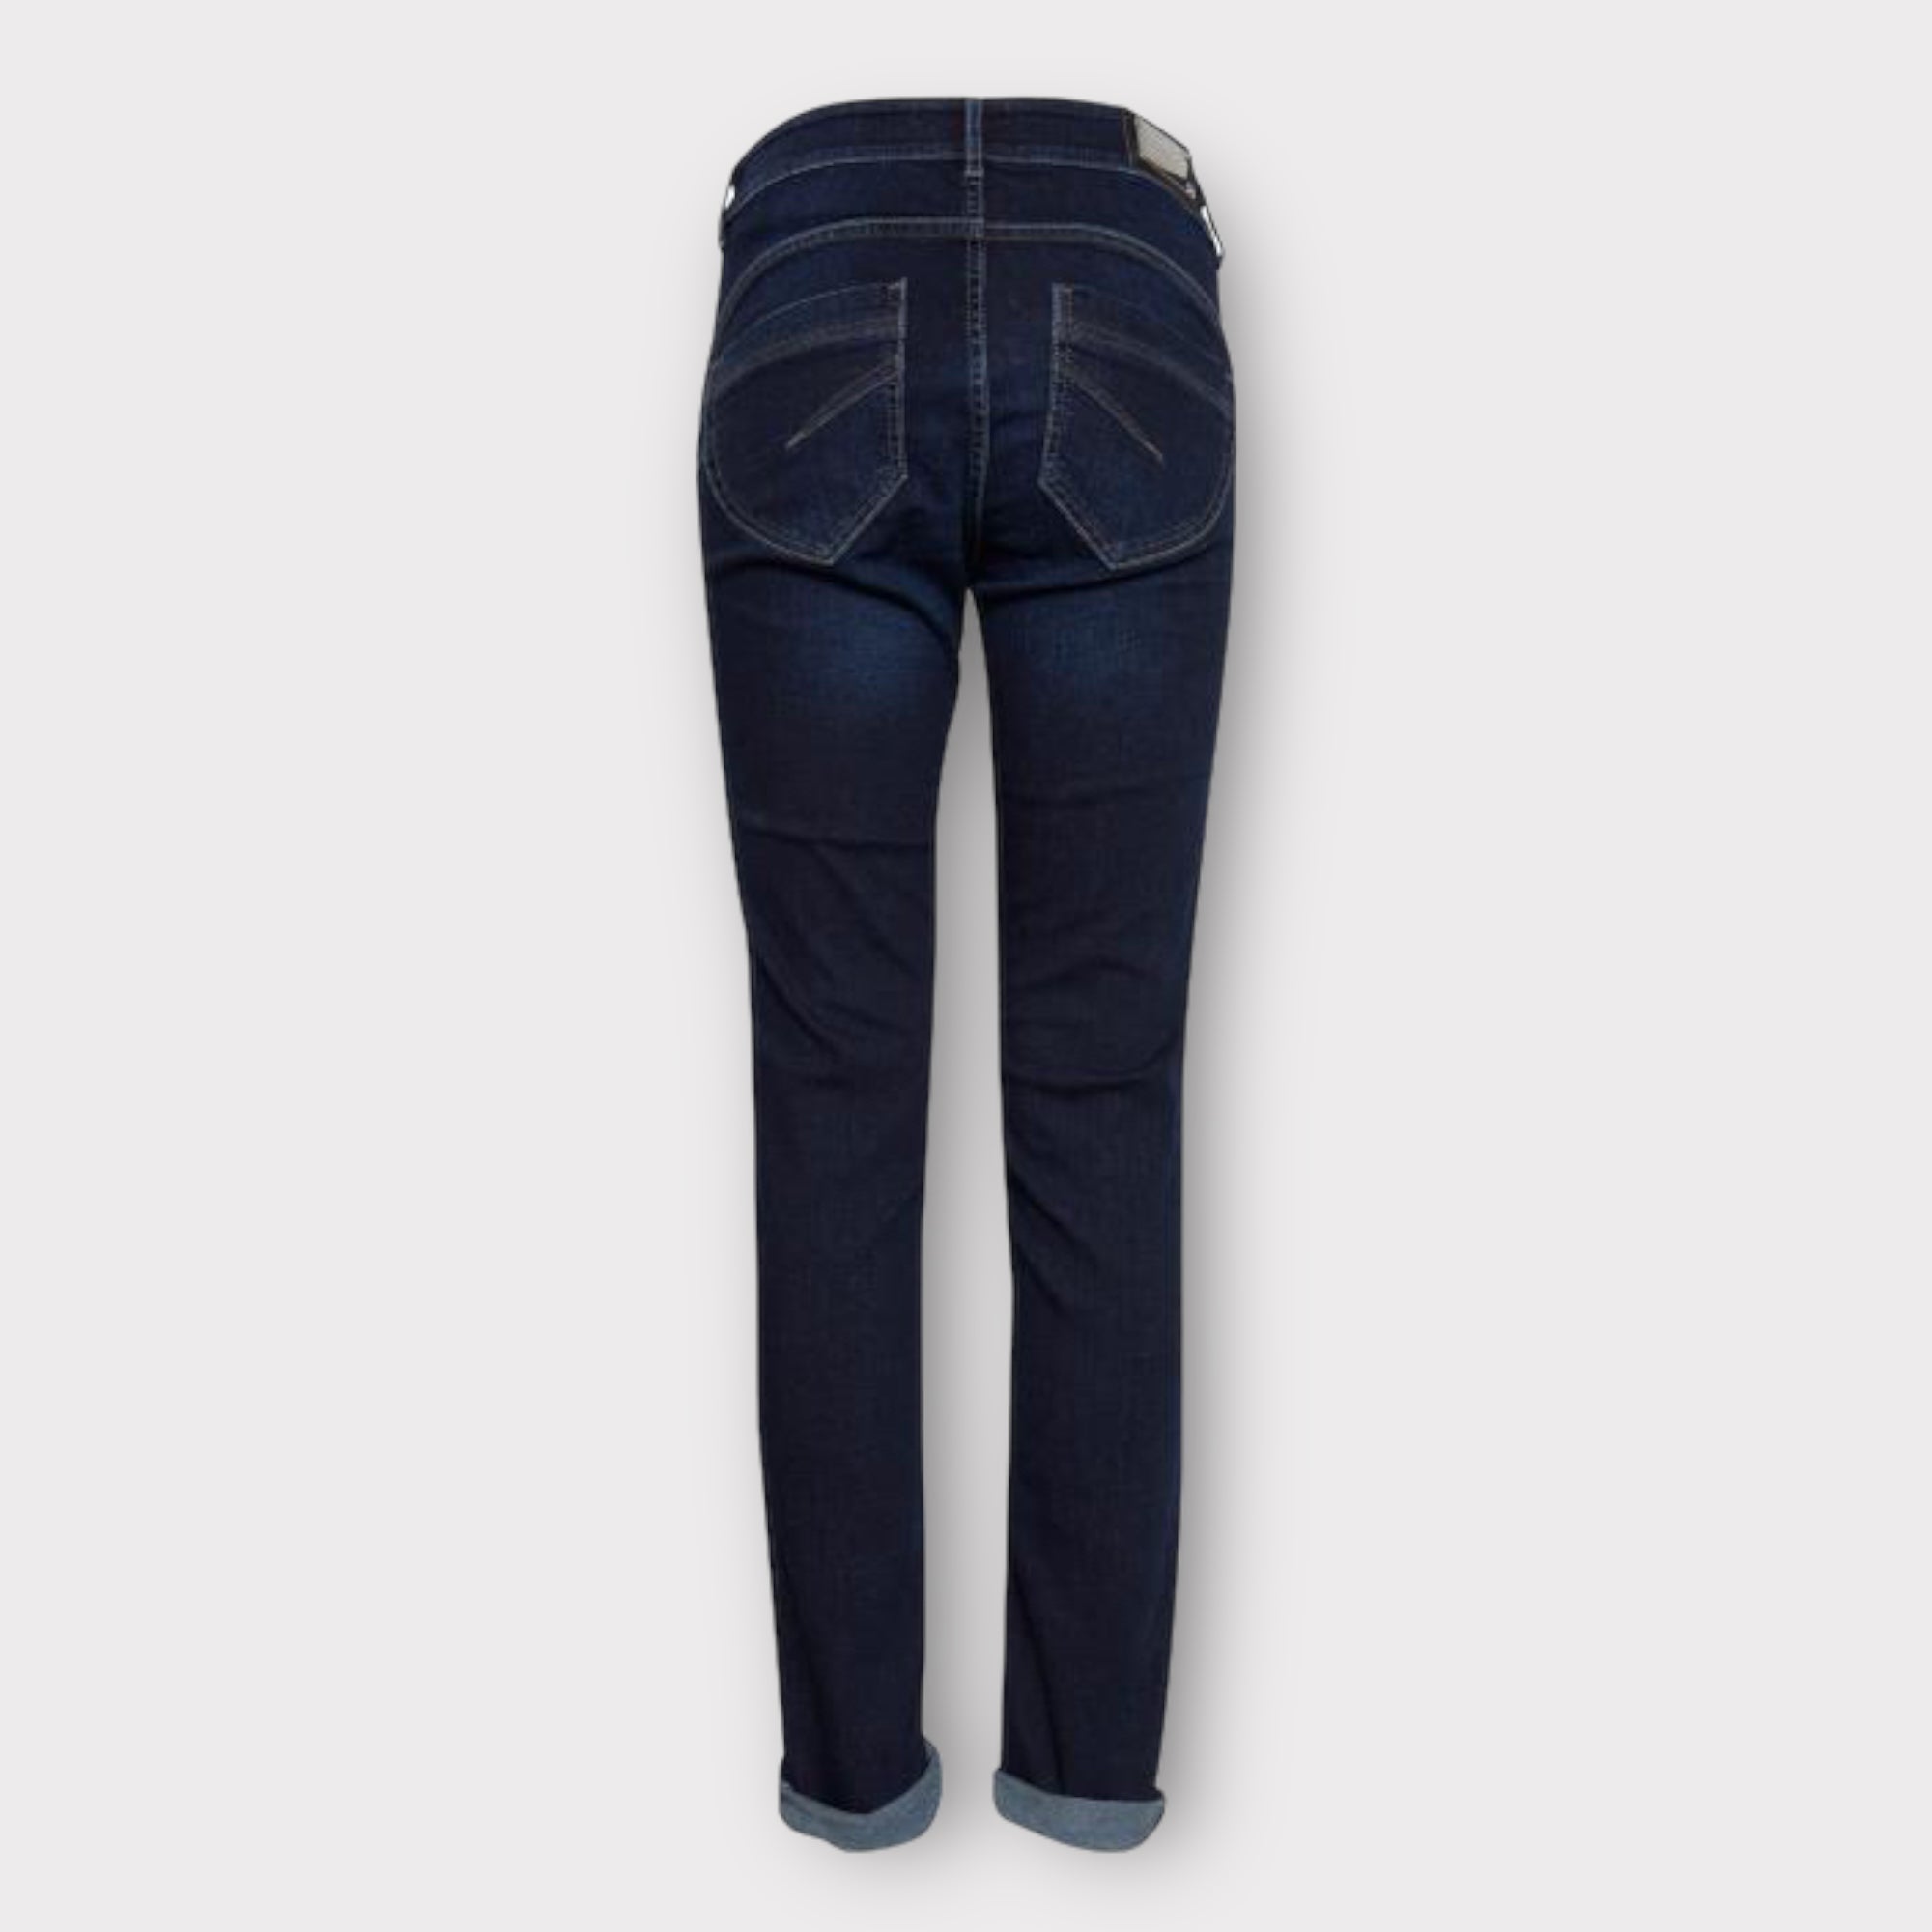 Dranella Pam Slim Fit Jeans Dark Blue Denim